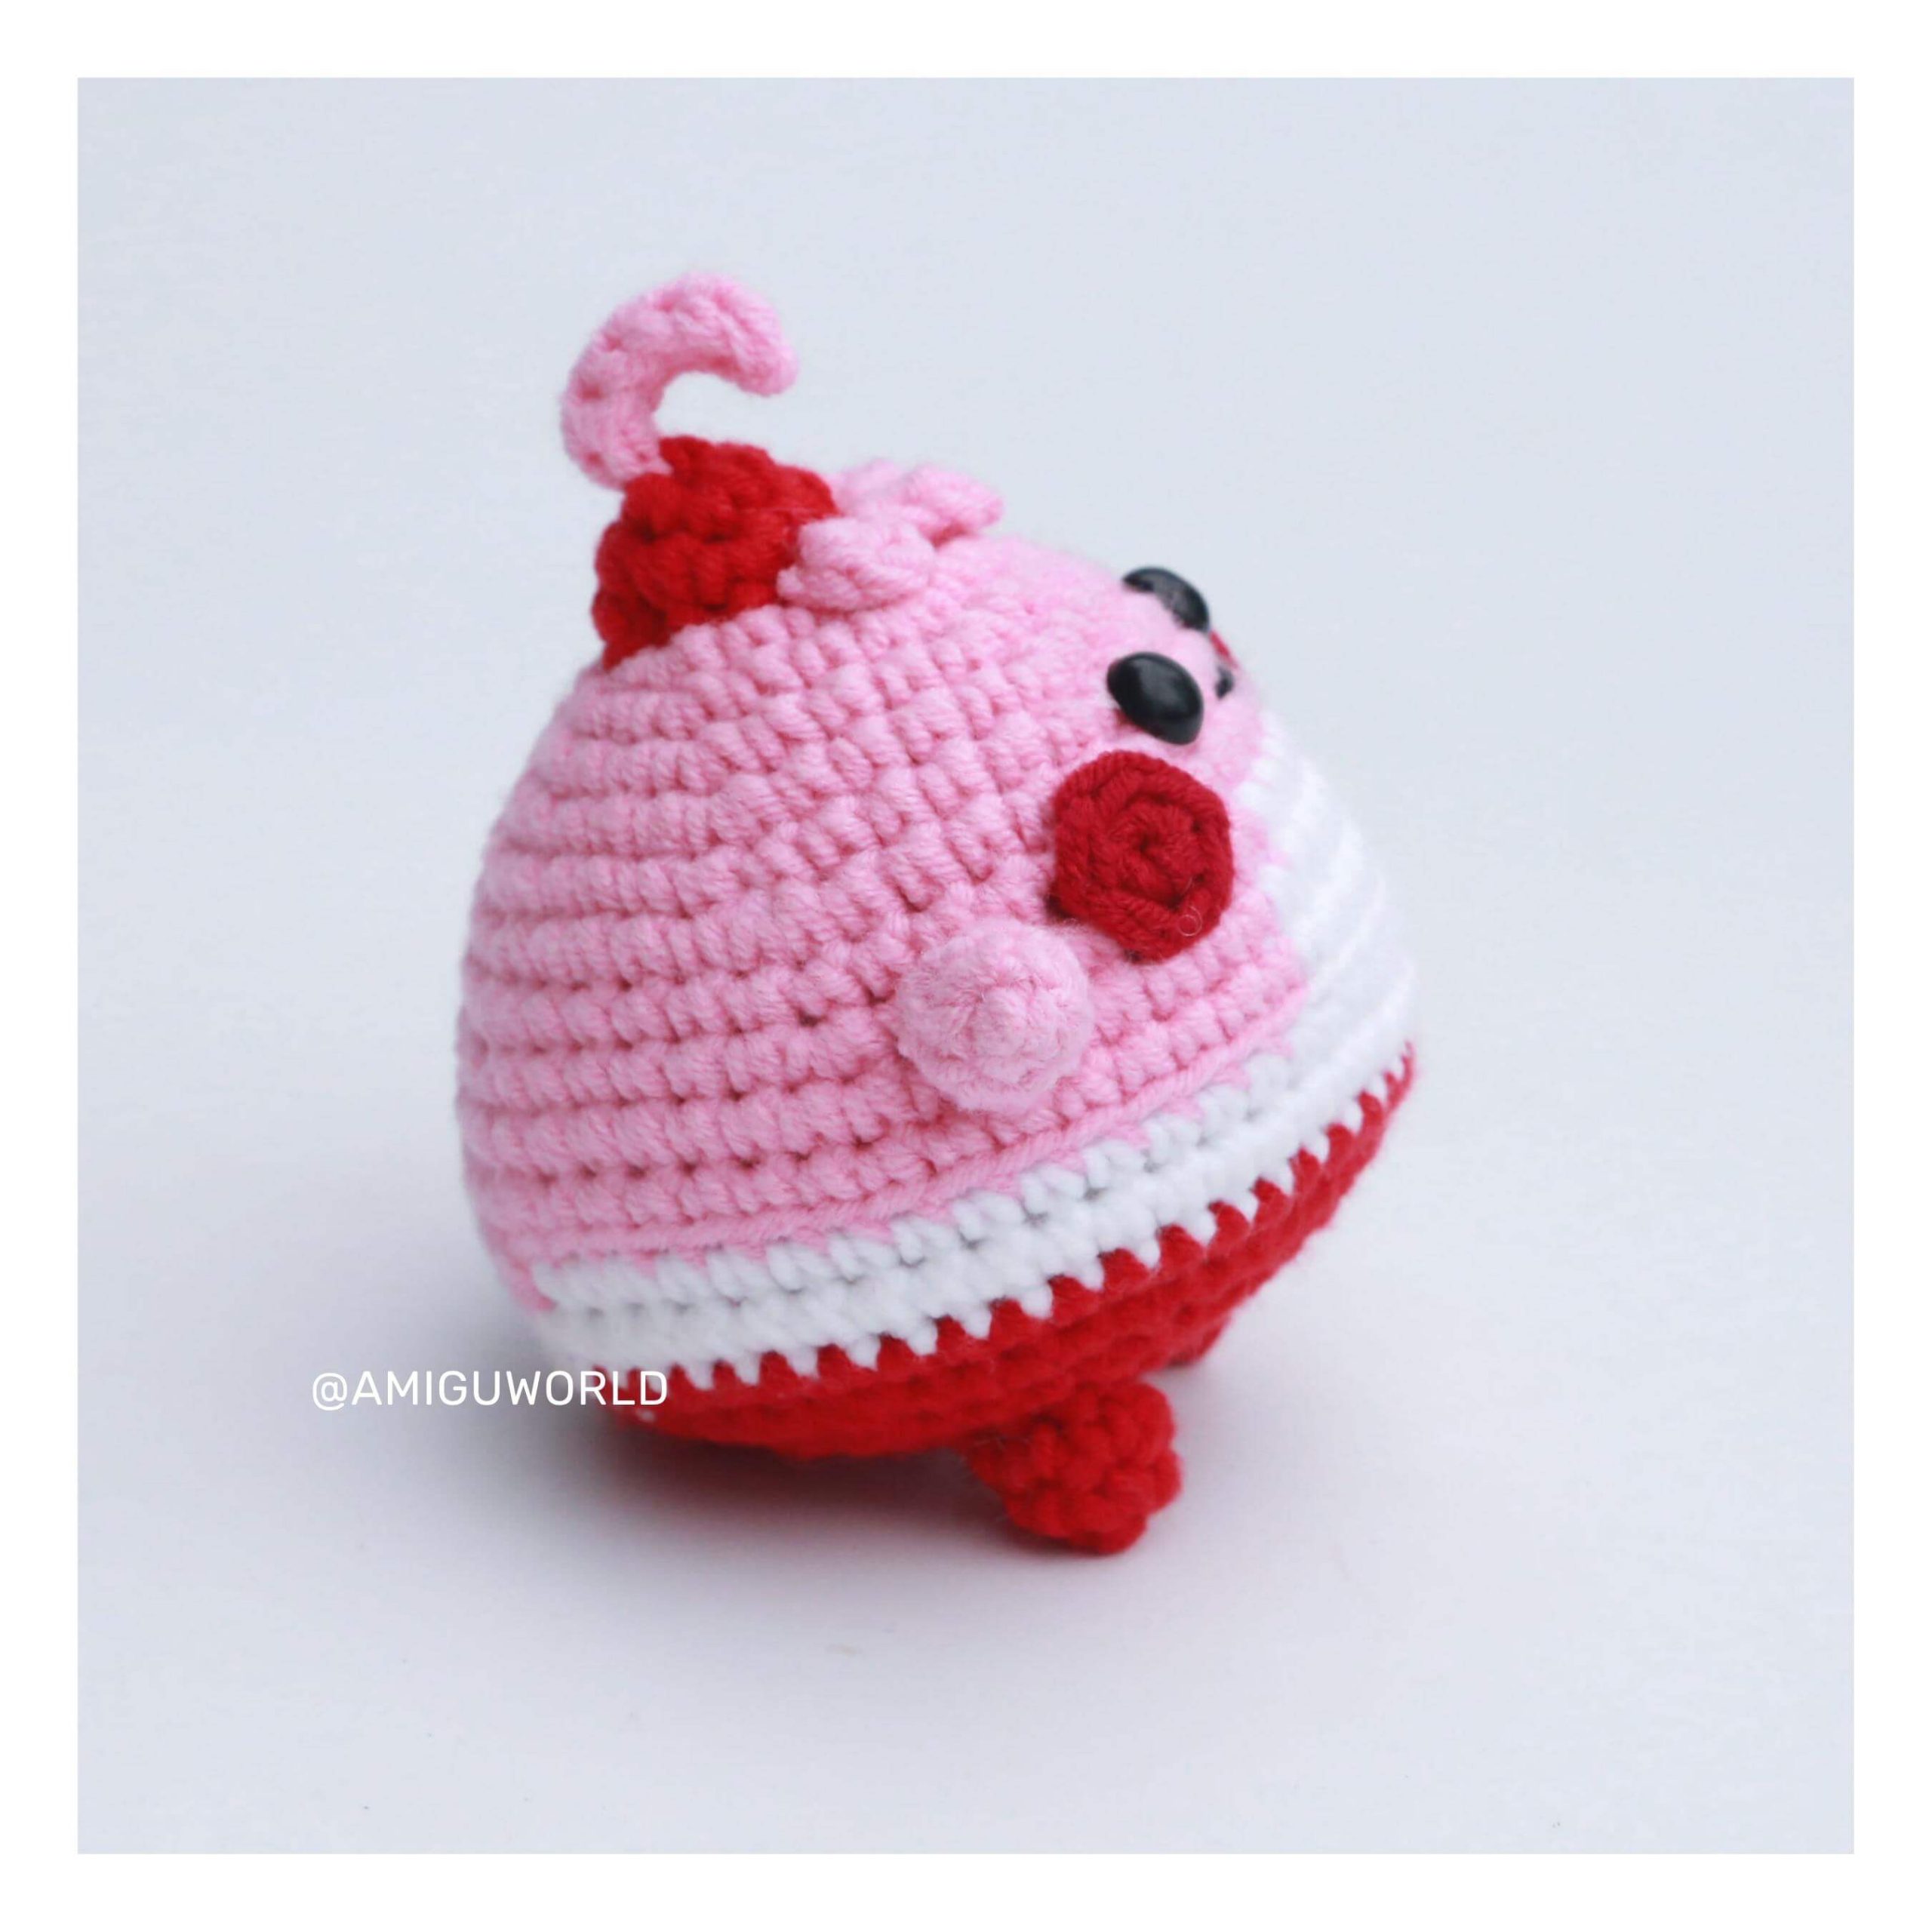 Happiny-amigurumi-crochet-pattern-amiguworld (2)